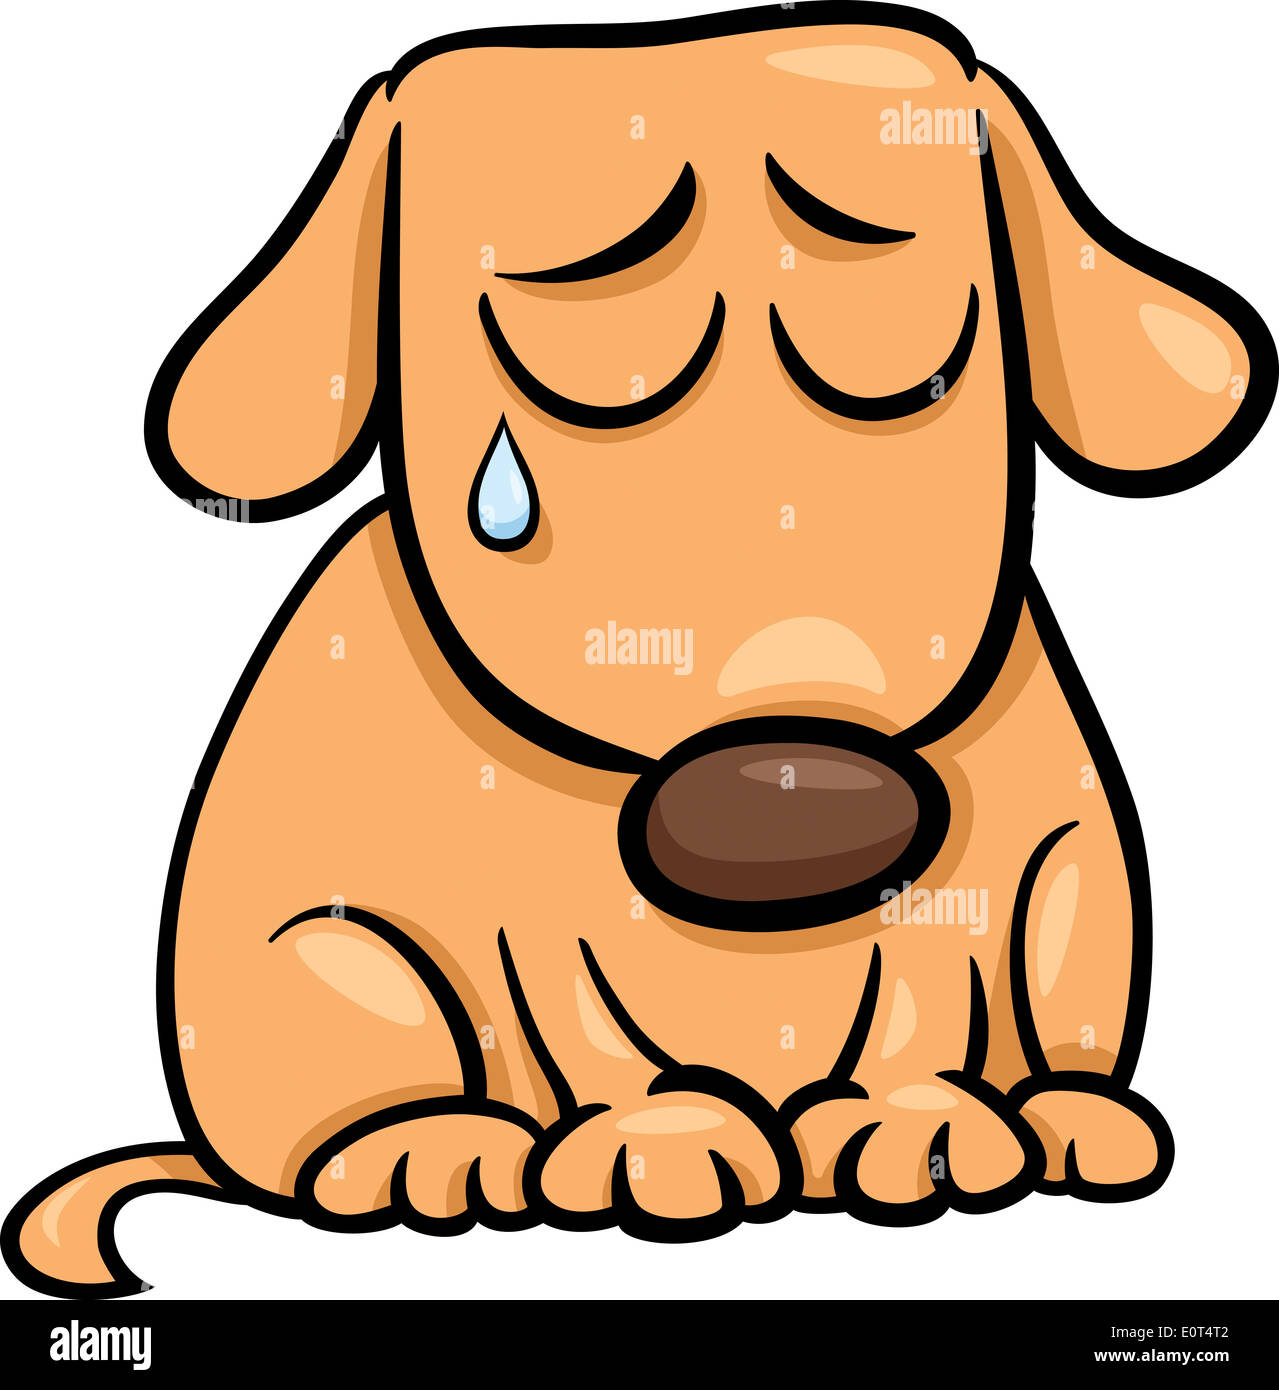 Cartoon Illustration of Cute Sad Dog or Puppy Stock Photo - Alamy